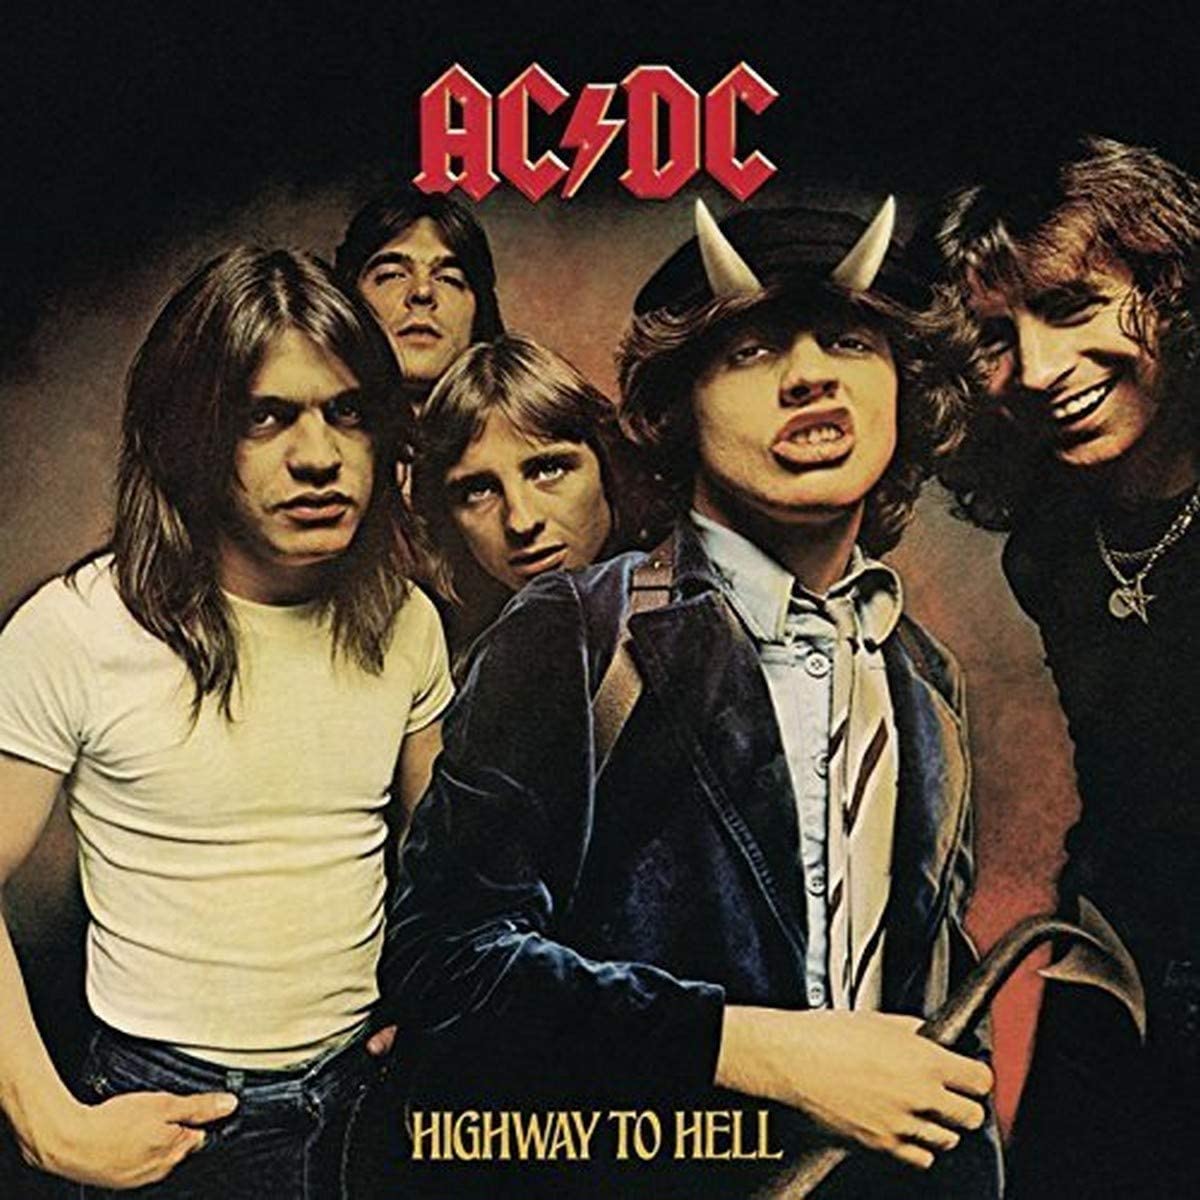 AC/DC "Highway To Hell" Vinyl